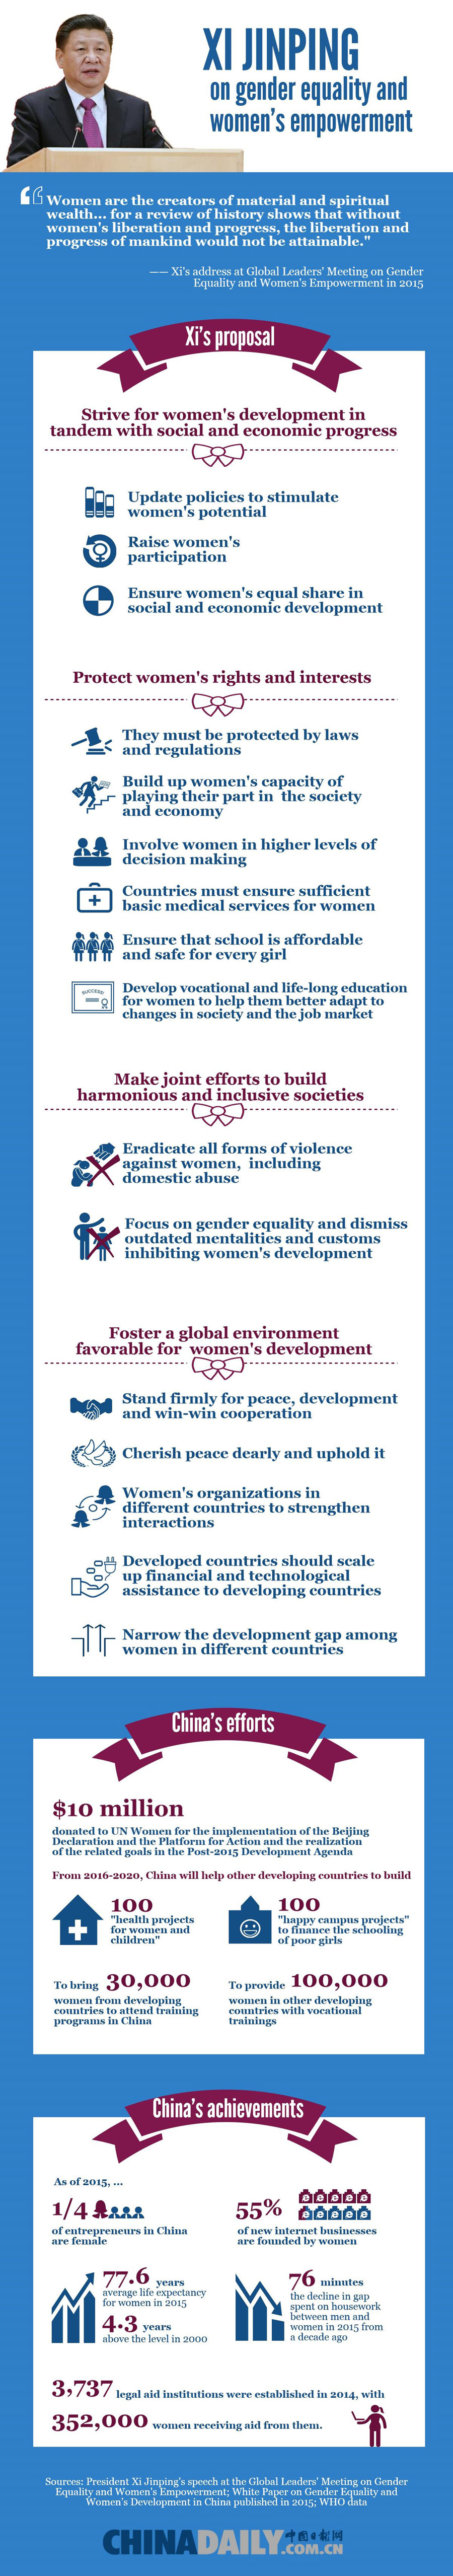 Xi's leadership: Empowering women; inspiring equality